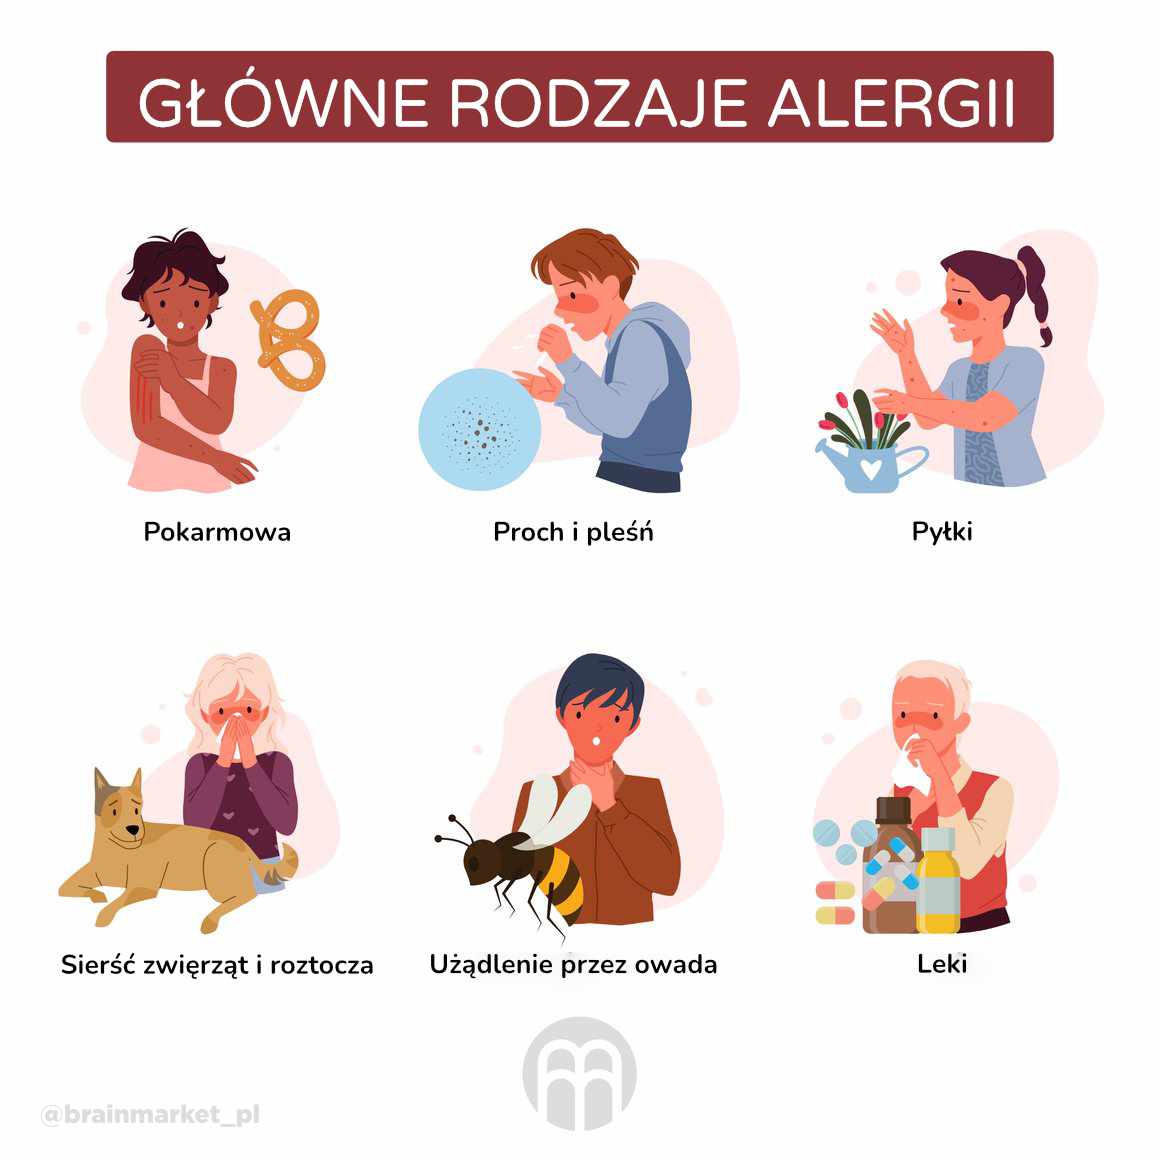 hlavni tipy alergii_pl-2